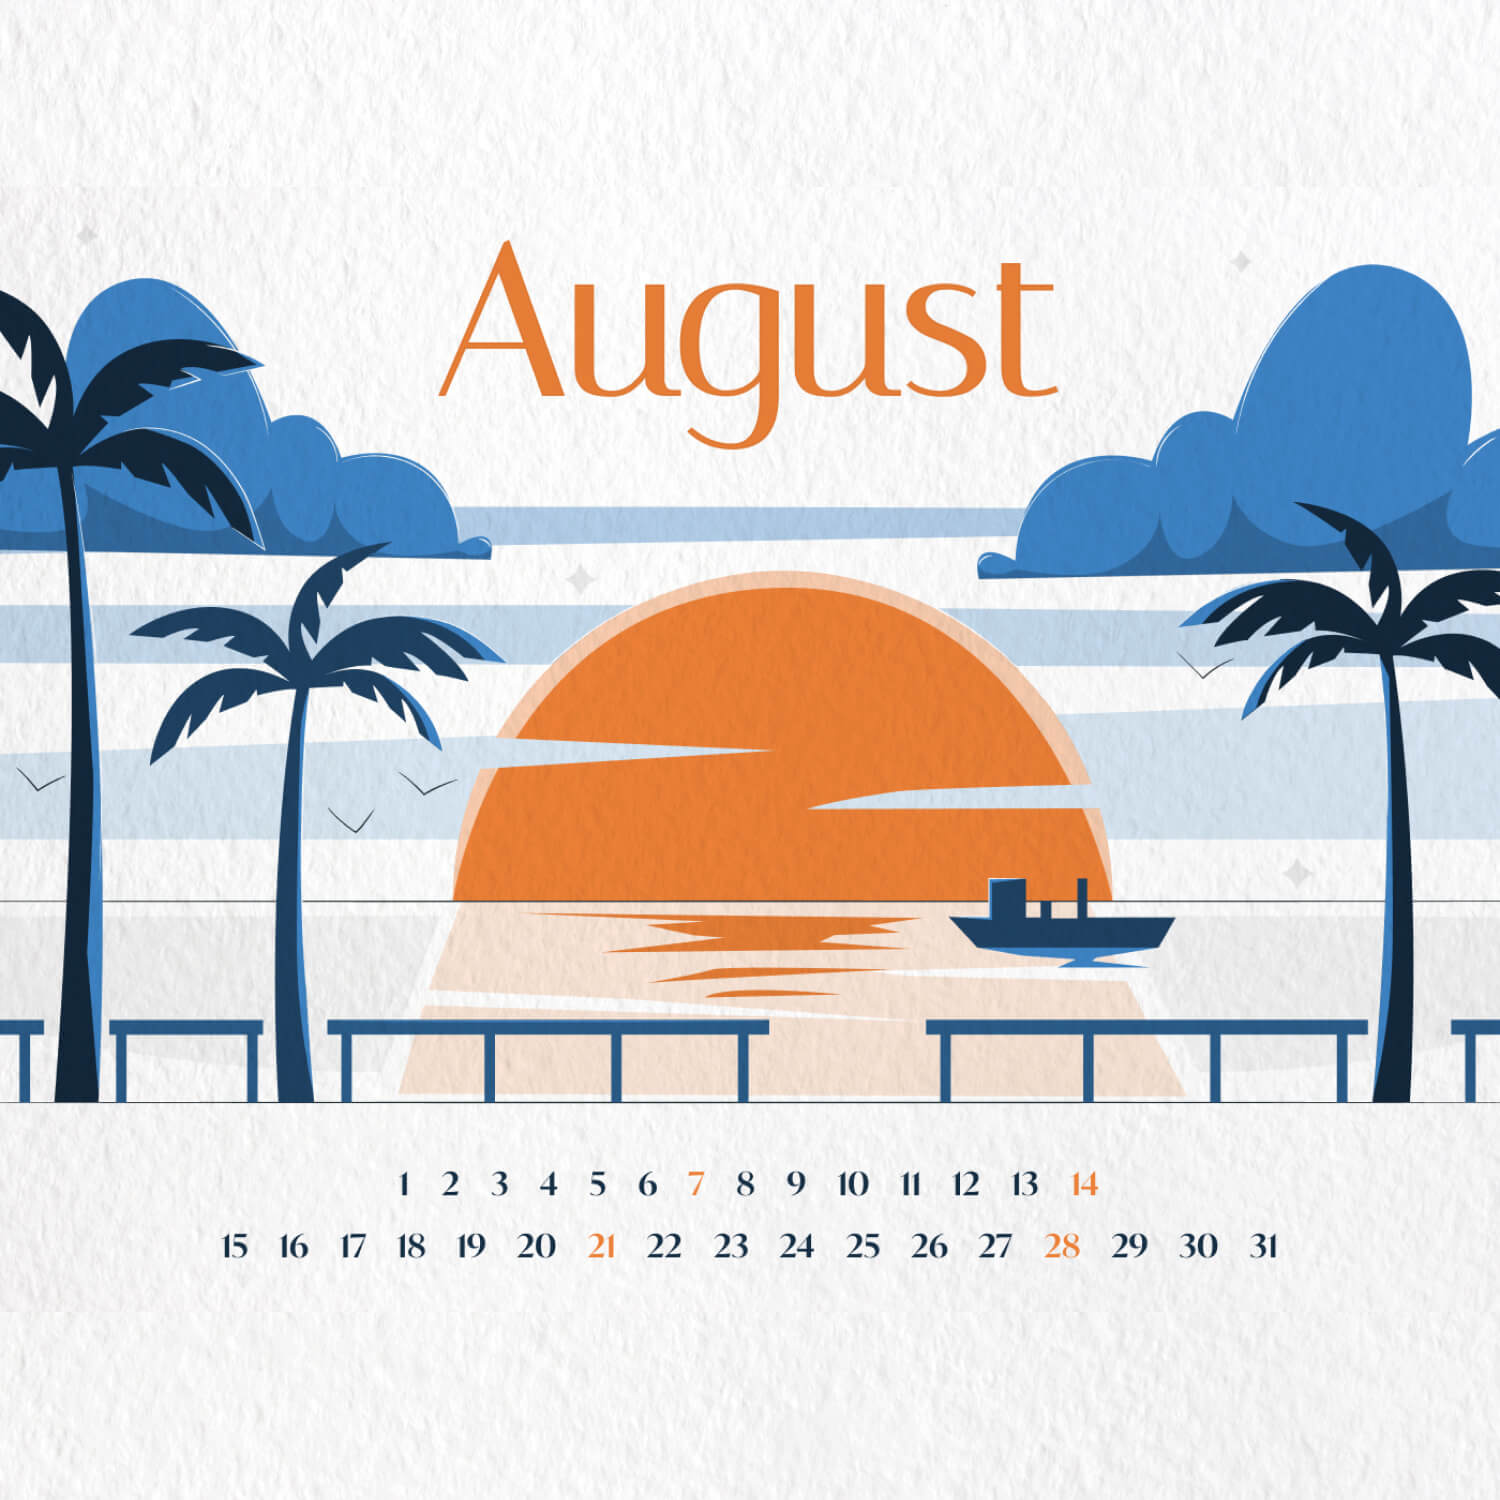 Free August Calendar Printable facebook image.